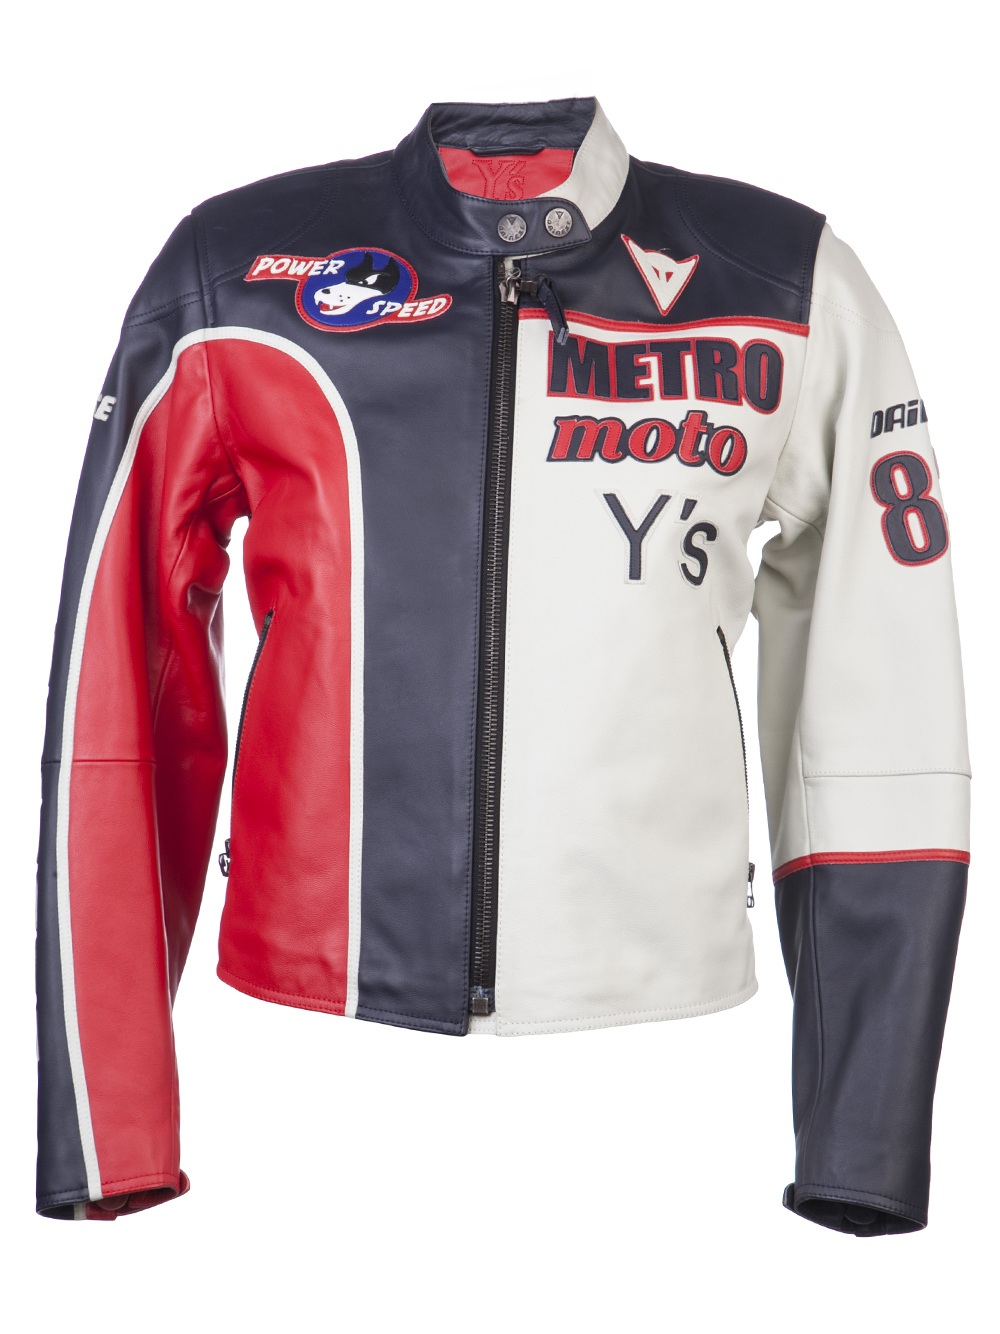 Lyst - Yohji Yamamoto Motorcycle Jacket in Red